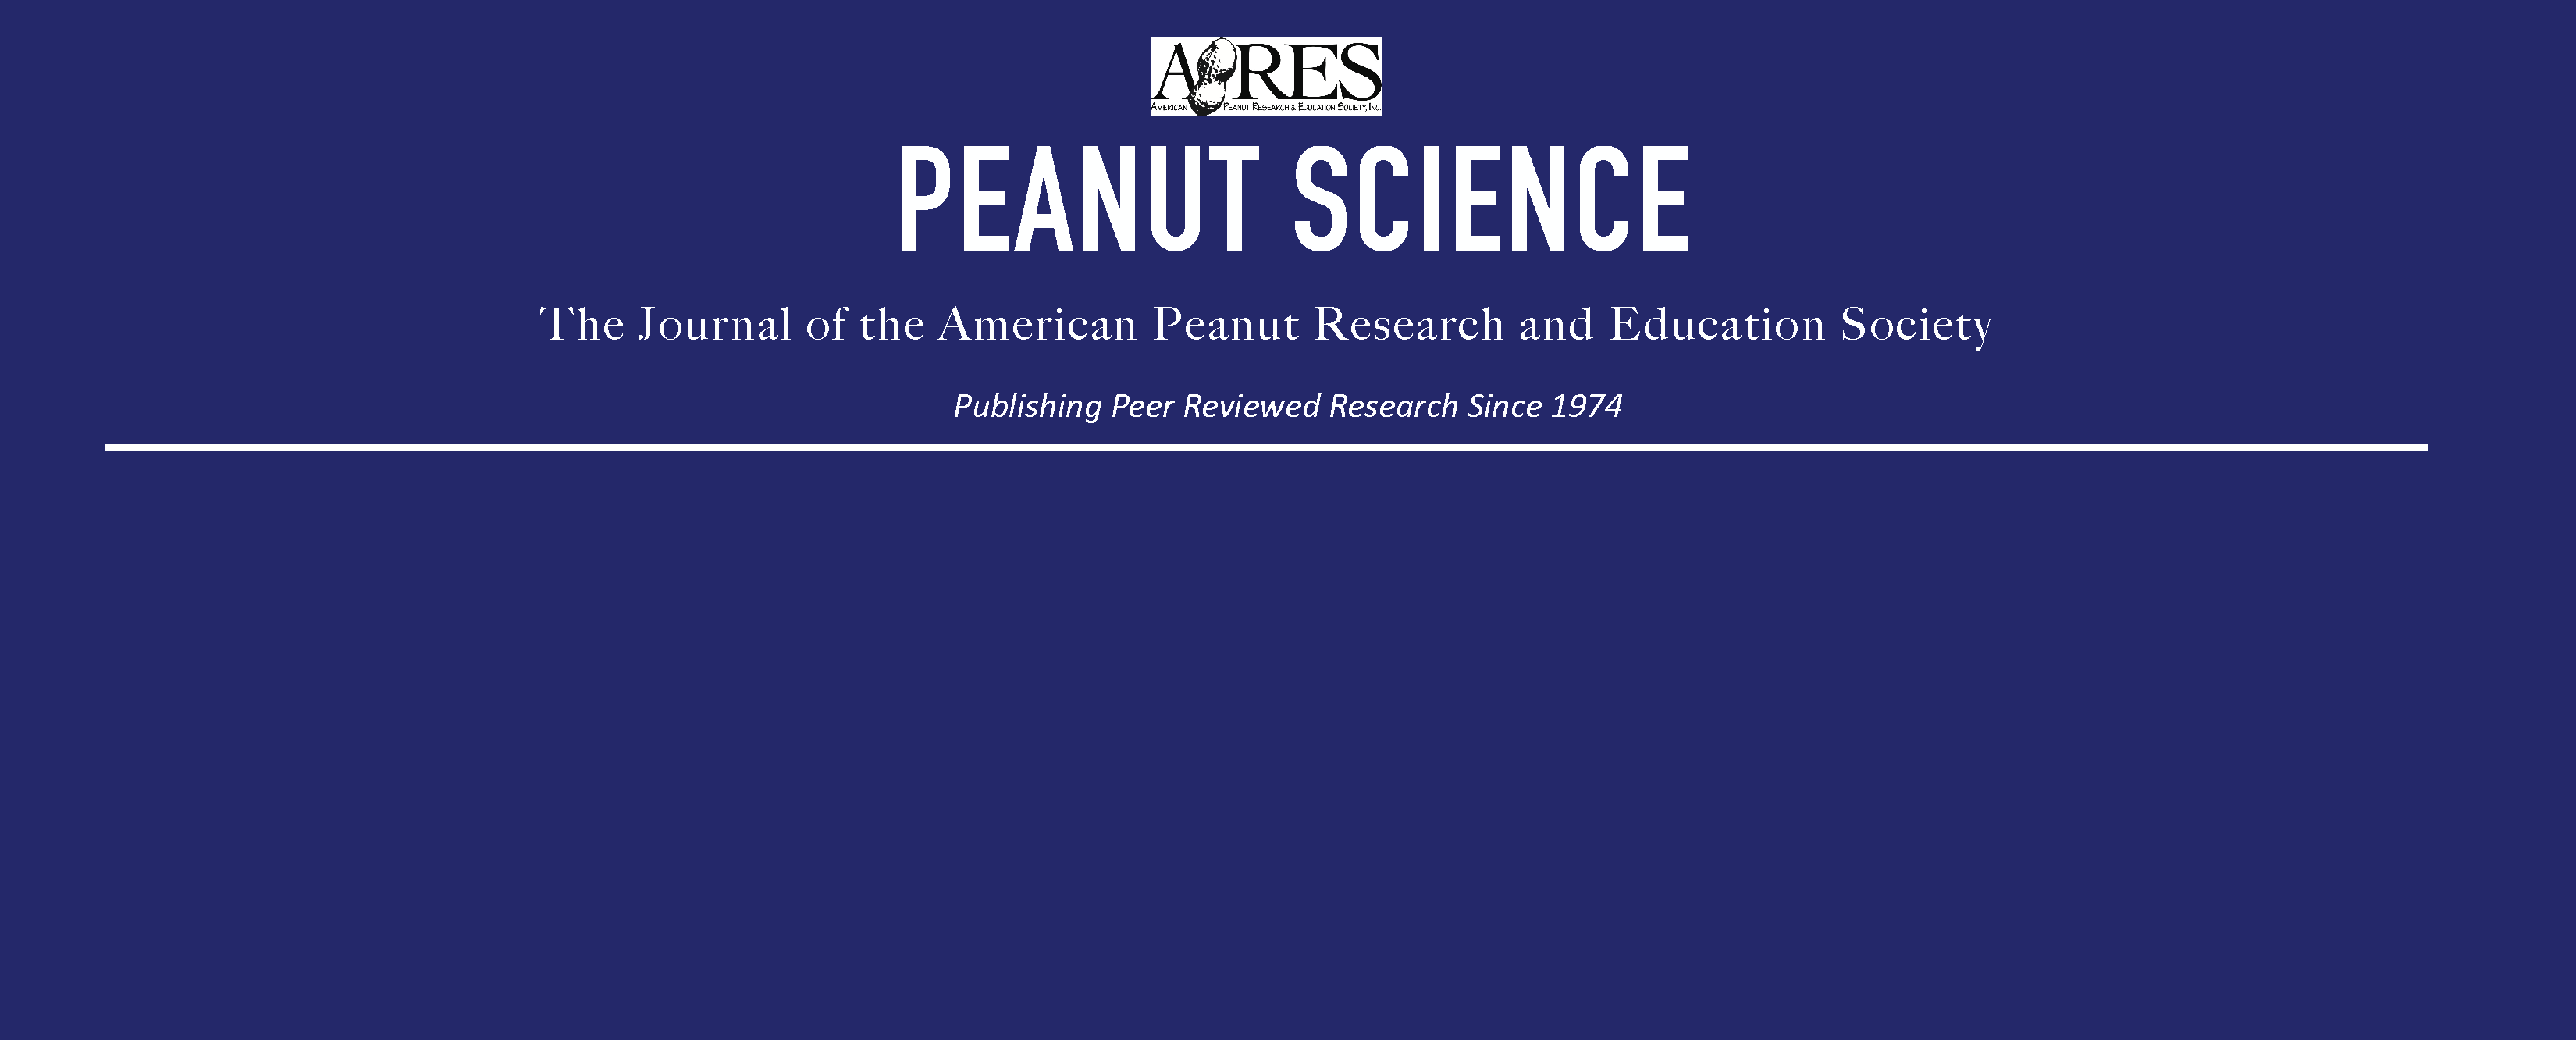 Virginia Market Type Peanut (Arachis hypogaea L.) Response to the Nitrophenolic Plant Growth Regulator Chaperone